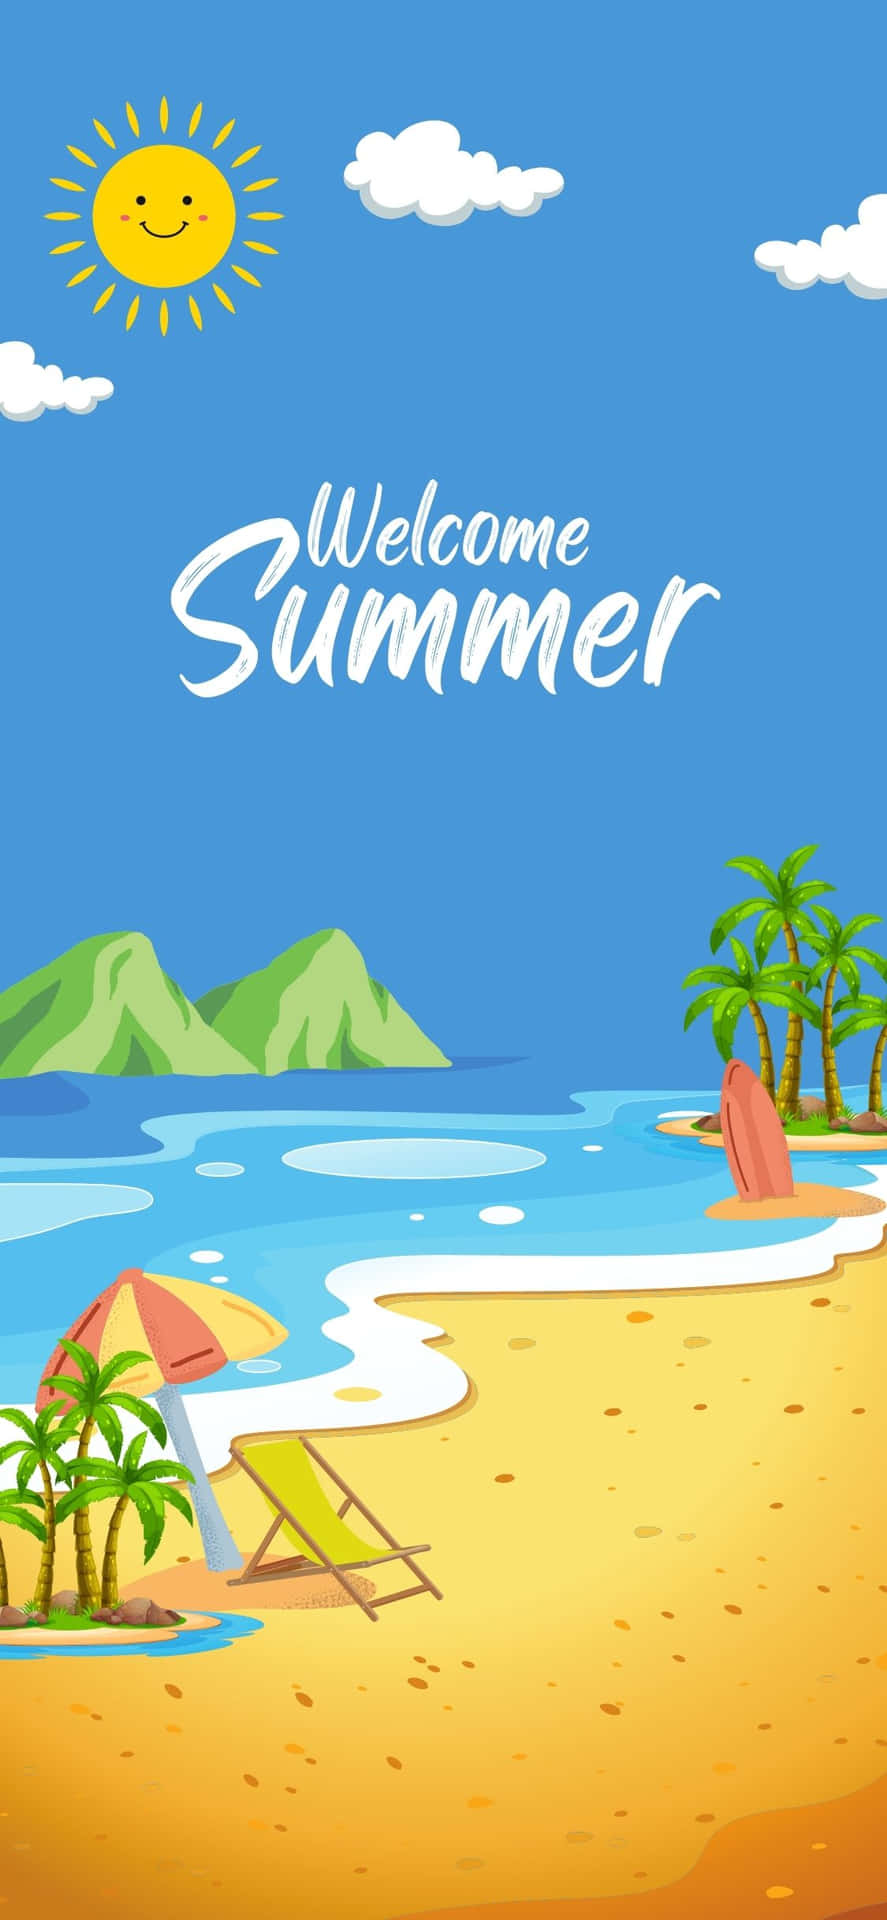 Tropical Beach Scene Illustration iPhone X Summer Background